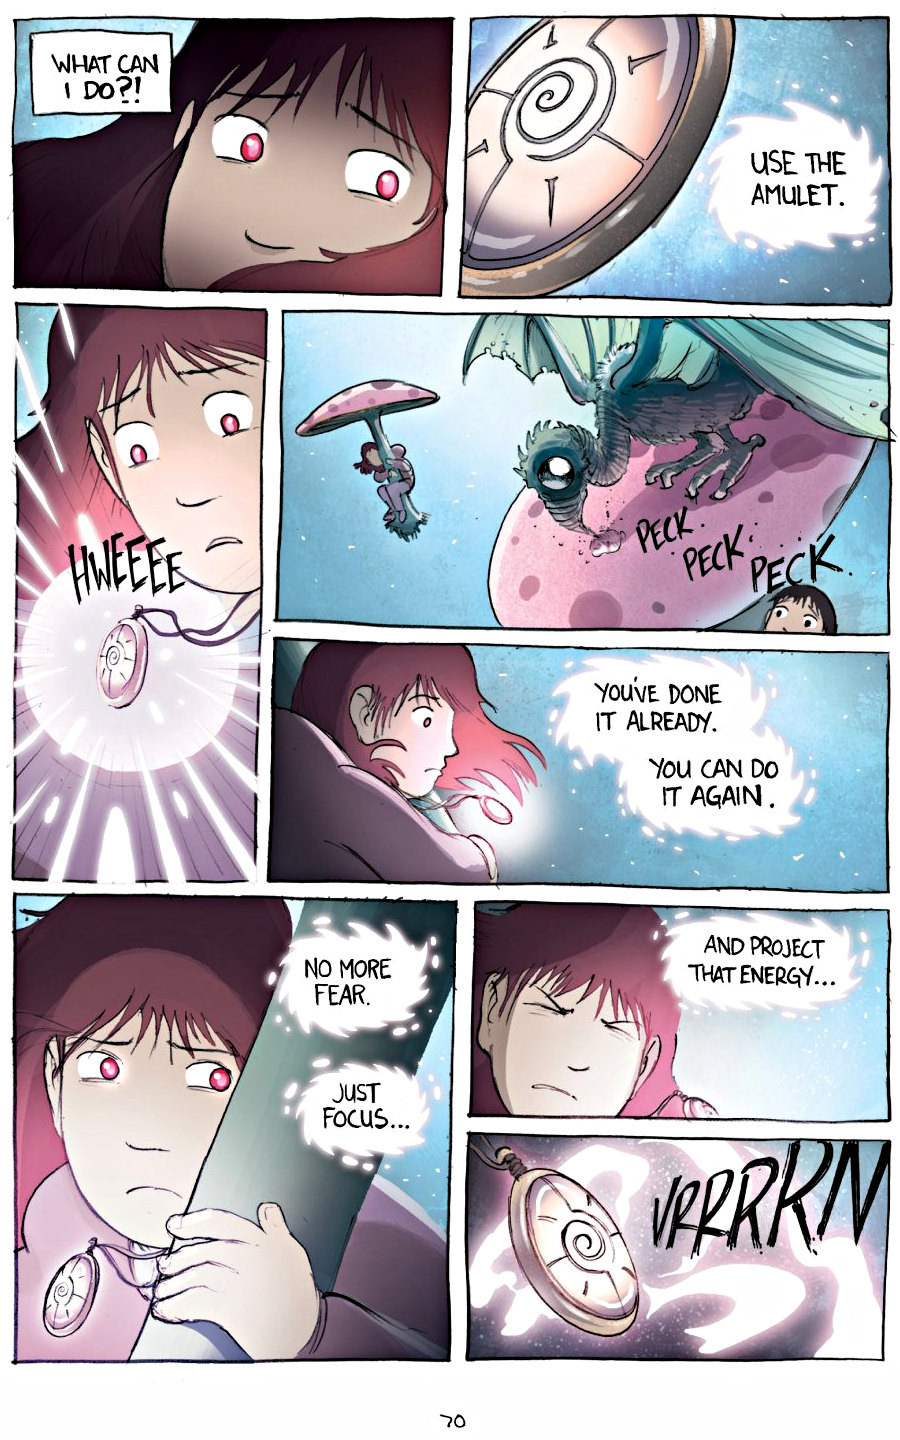 page 70 of amulet 1 stonekeeper graphic novel by kazu kibuishi - read online